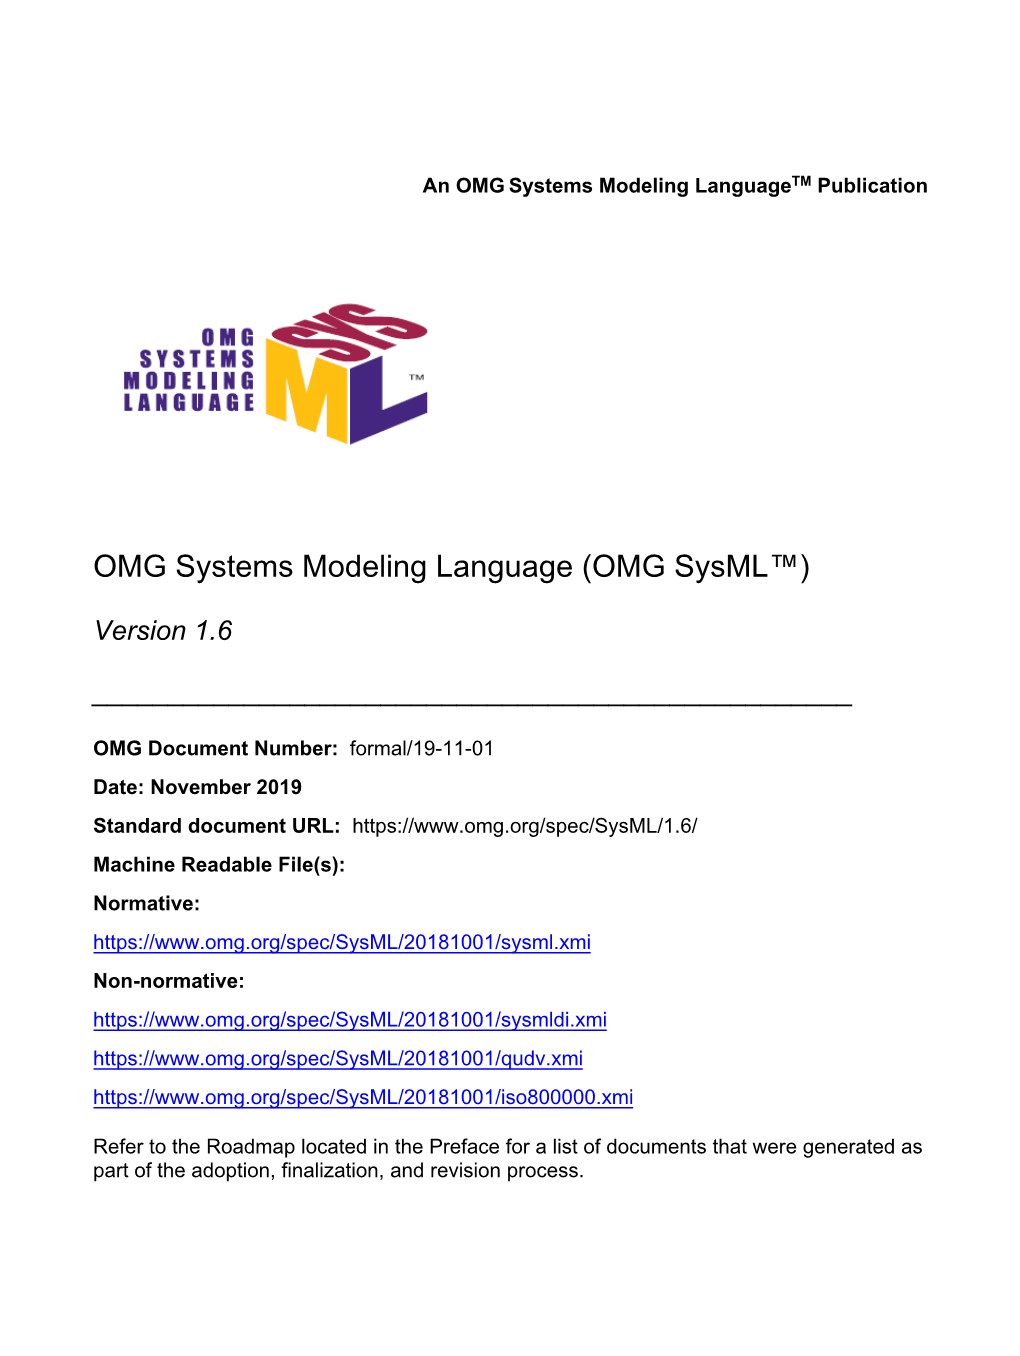 OMG Systems Modeling Language (OMG Sysml™)